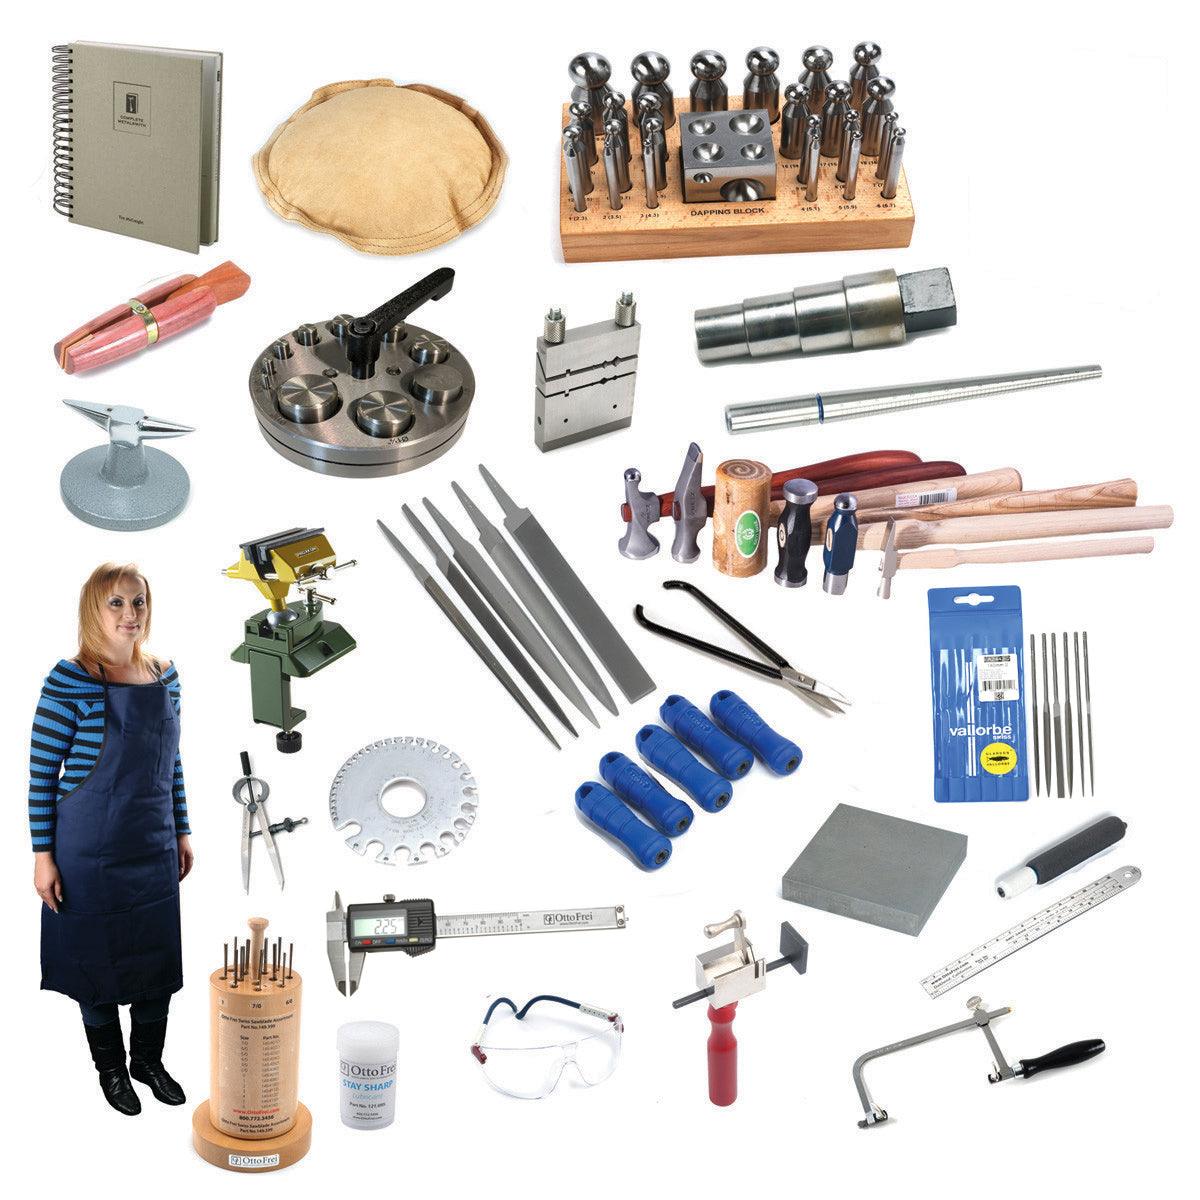 Professional Gold & Diamond Tester Kit - Jeweler's Tools, Supplies